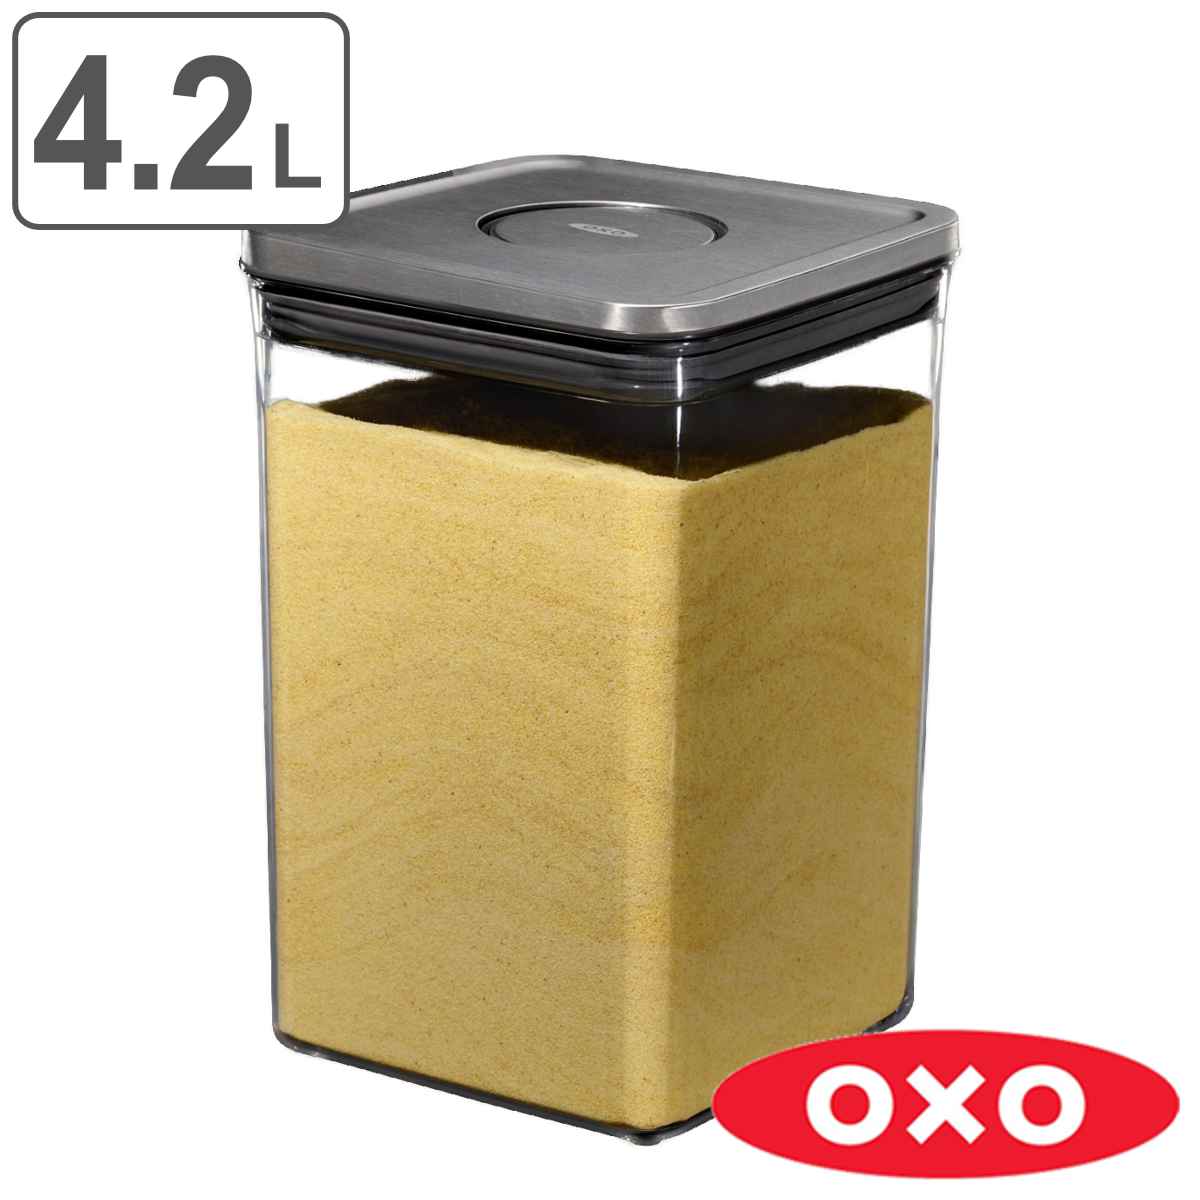 OXO オクソー ステンレスポップコンテナ ビッグスクエア ミディアム 4.2L